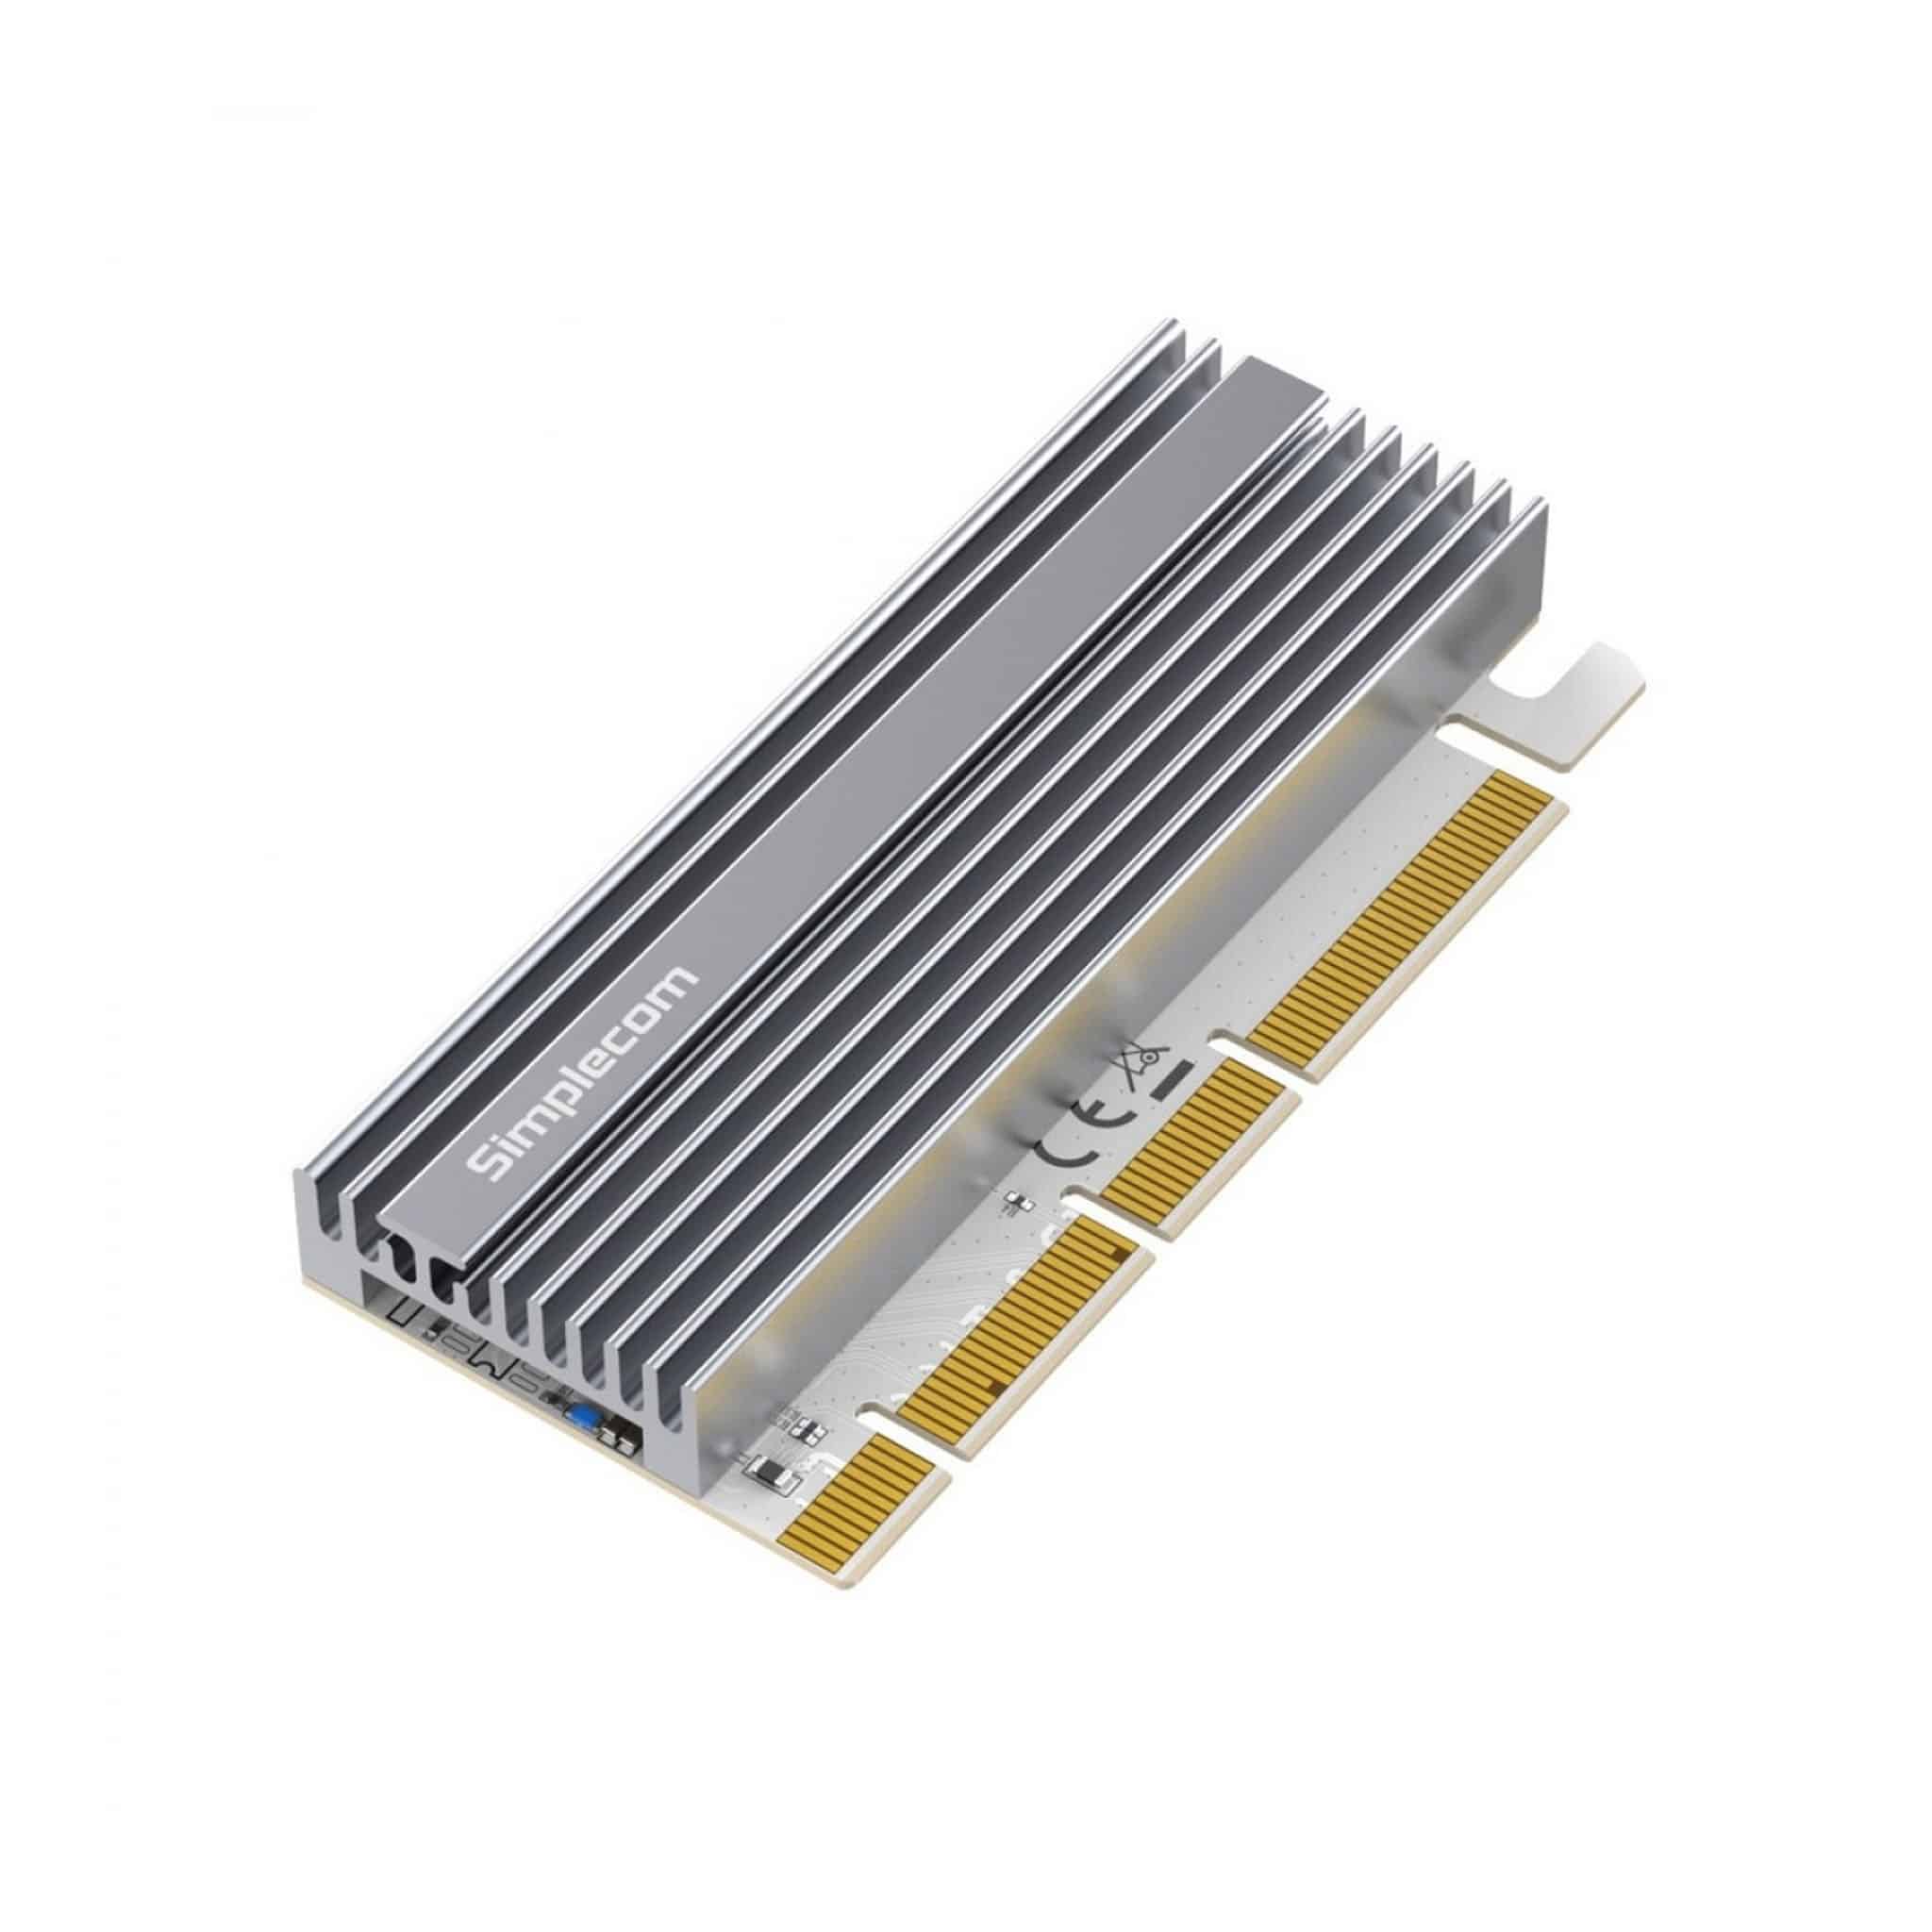 Simplecom EC415 RGB PCIe to NVMe Expansion Card